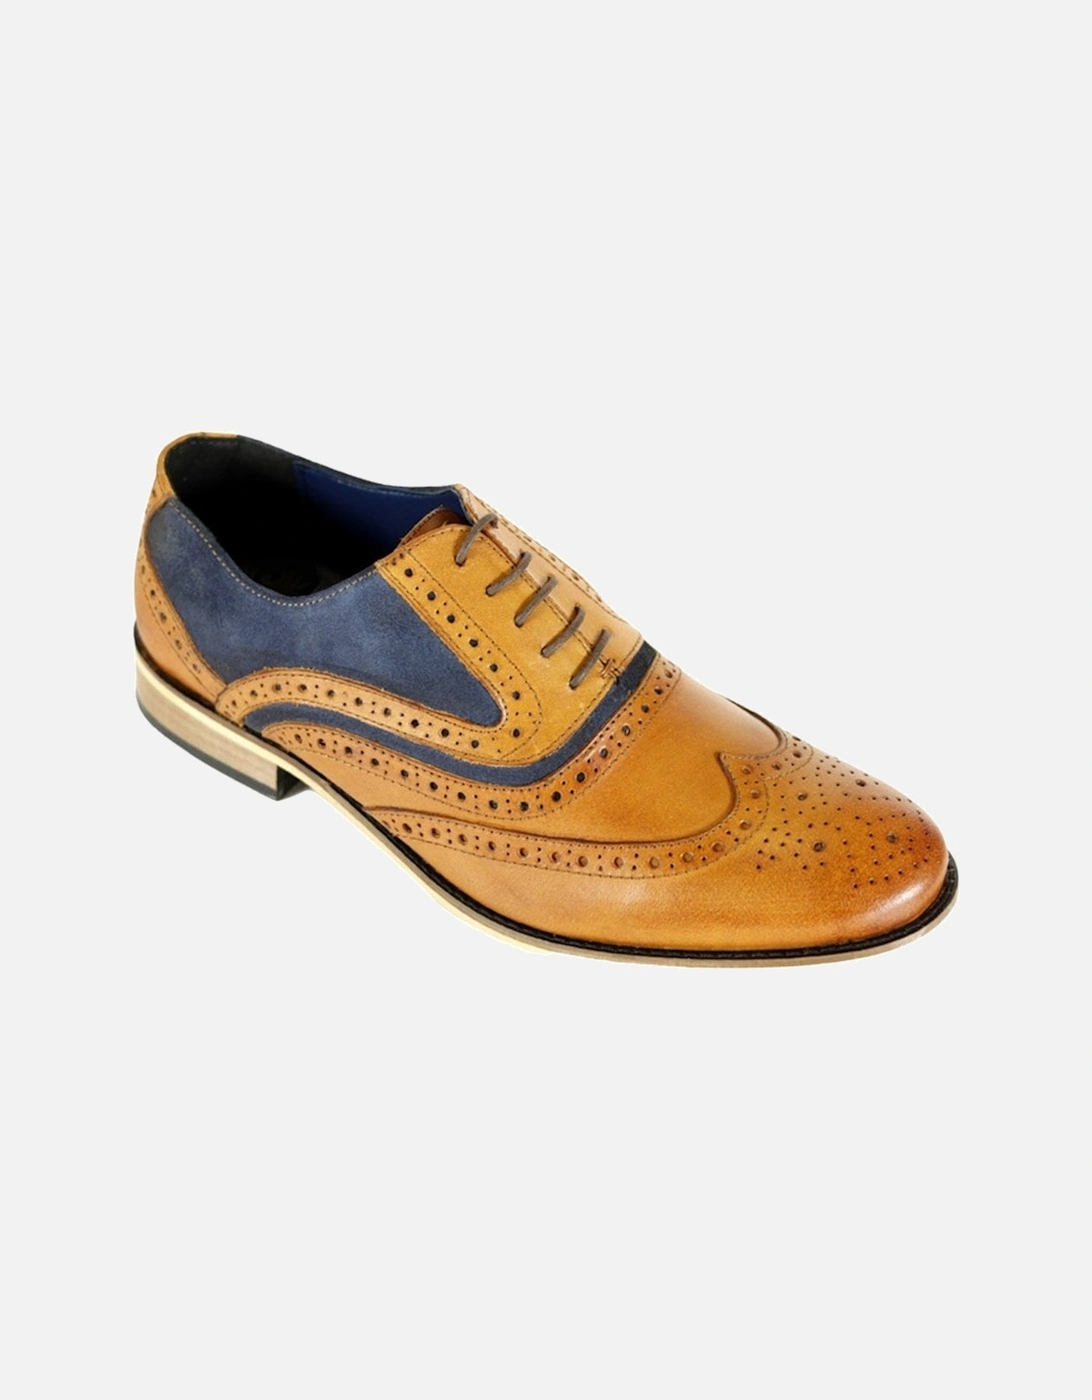 Spencer Brogue Shoes - Tan & Navy, 5 of 4